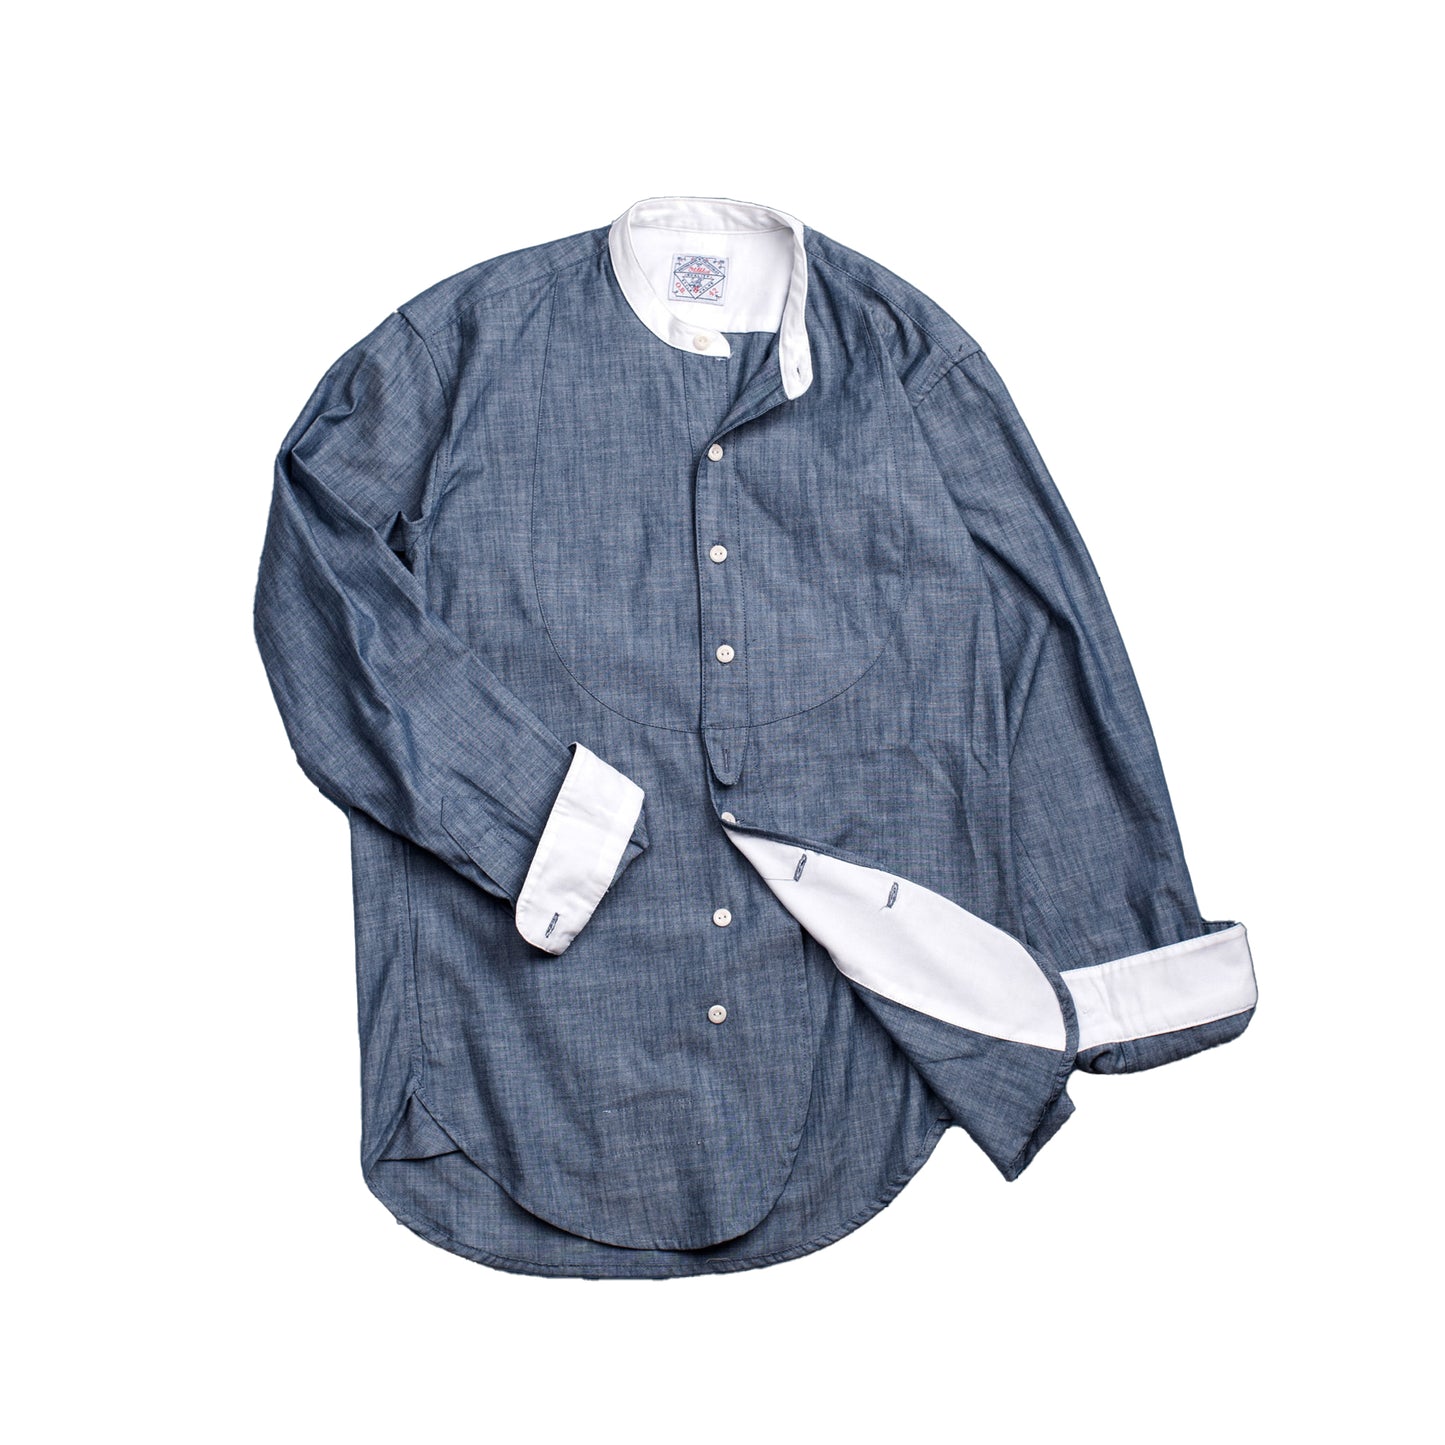 Oldblue Co ‘Vaquero Shirt I’ - Light Chambray - SALE 35% OFF